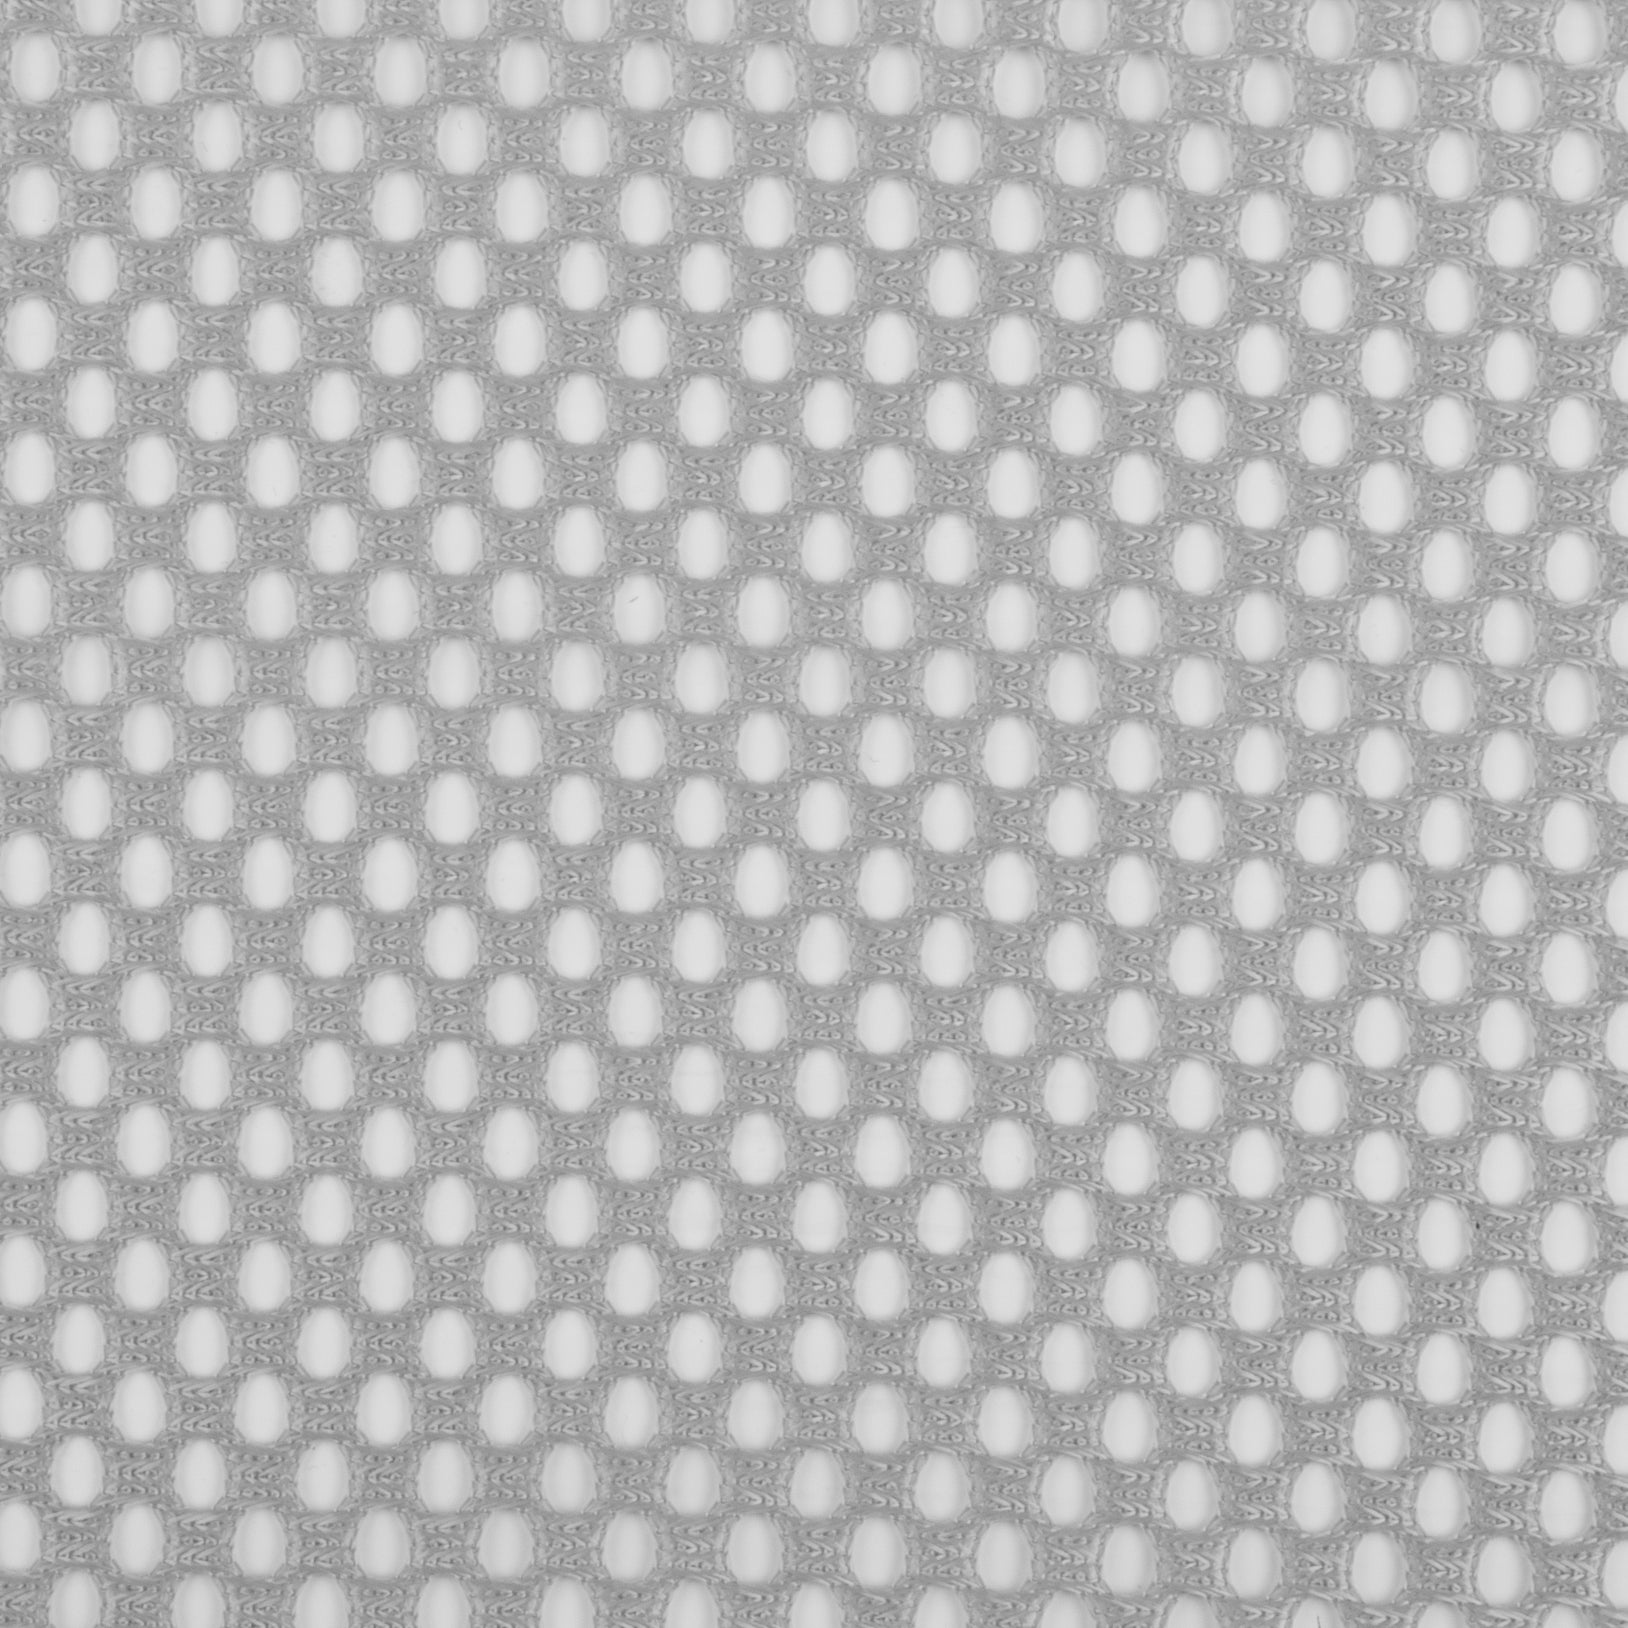 Gray Fabric Netting Image & Photo (Free Trial)